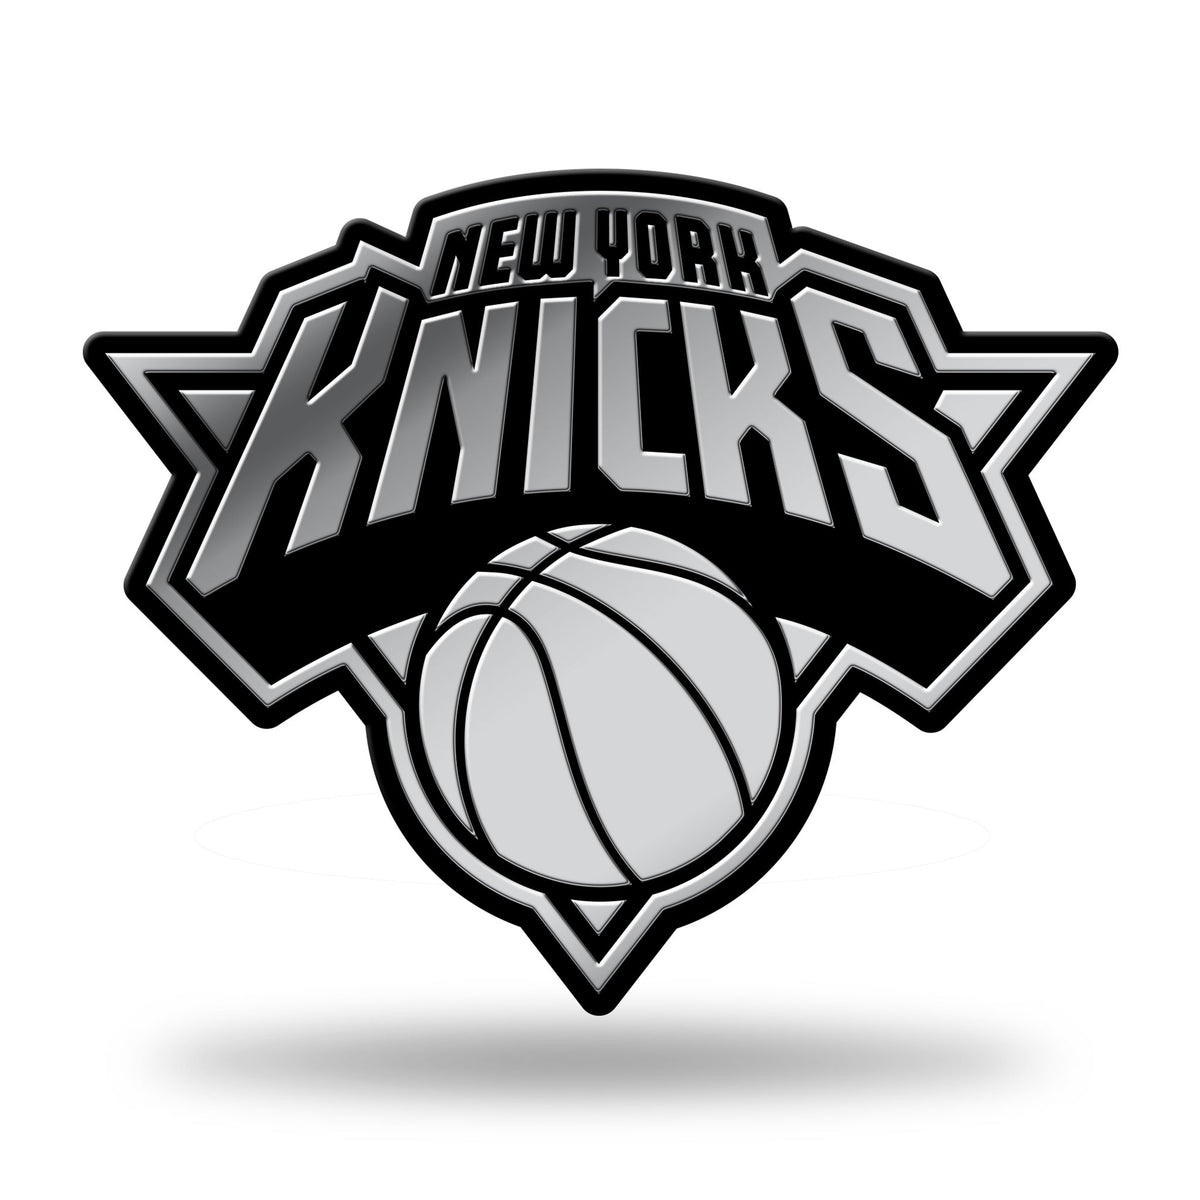 New York Knicks Molded Chrome Car Emblem